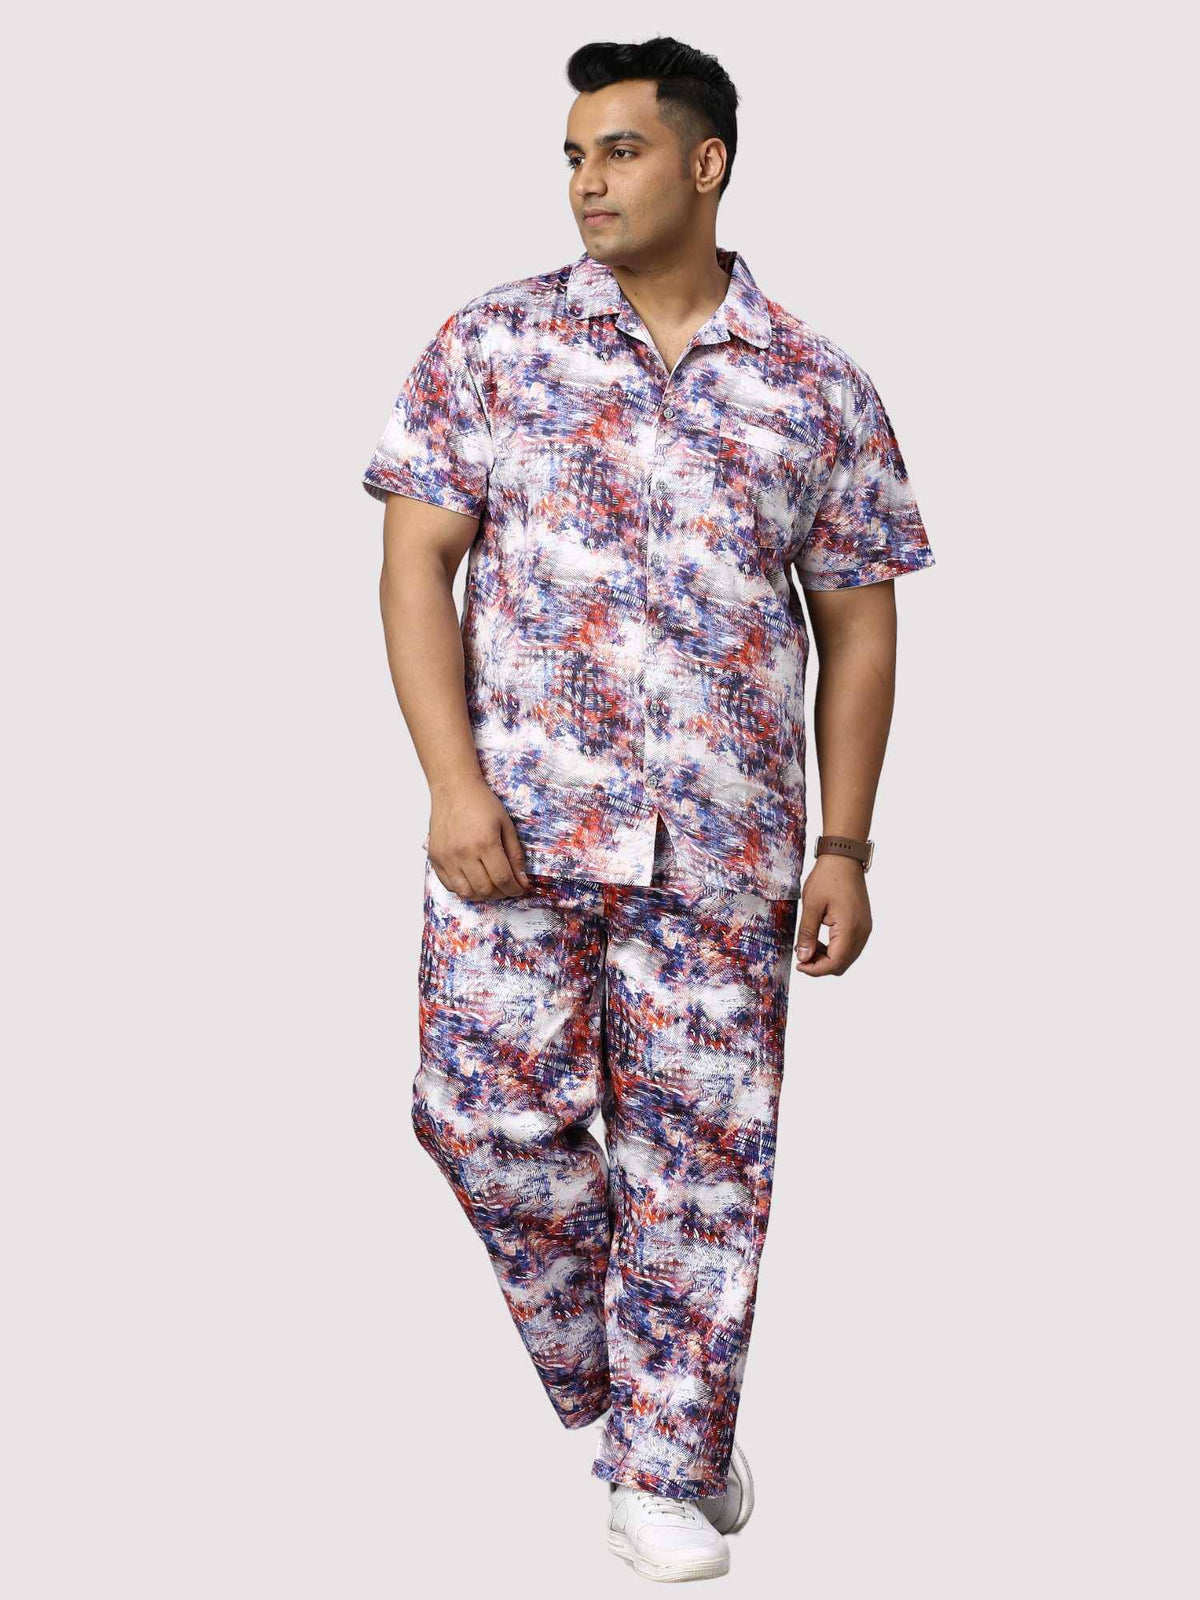 Monsoon Hue Digital Printed Full Co-Ords Men's Plus Size - Guniaa Fashions